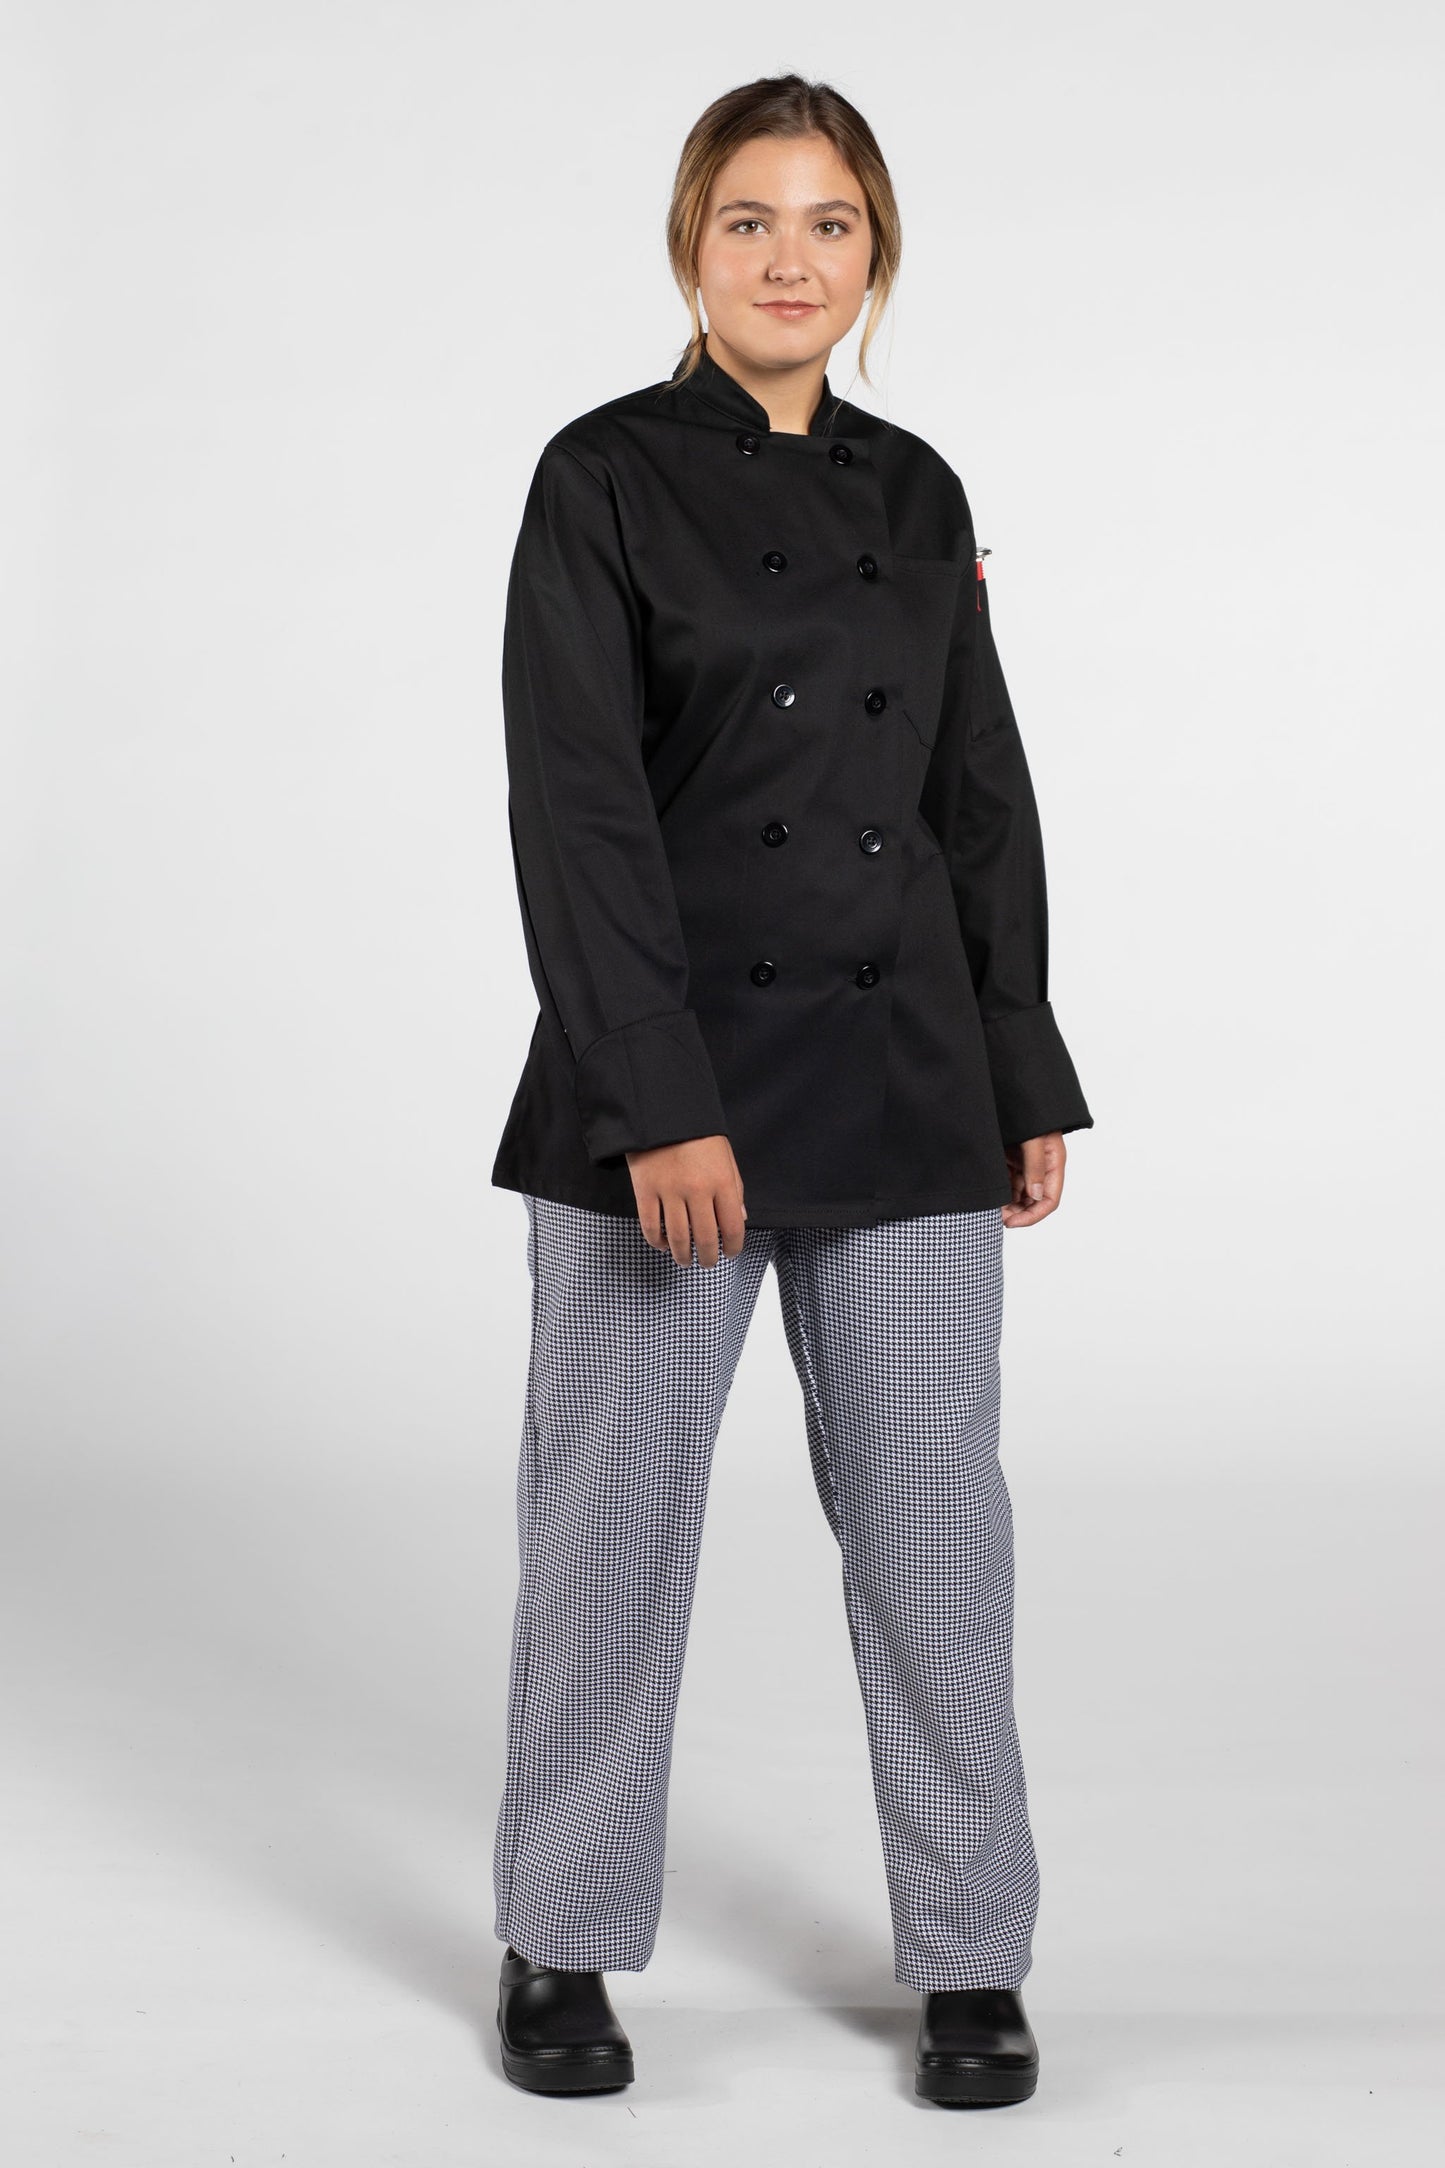 Napa Women's Chef Coat #0475